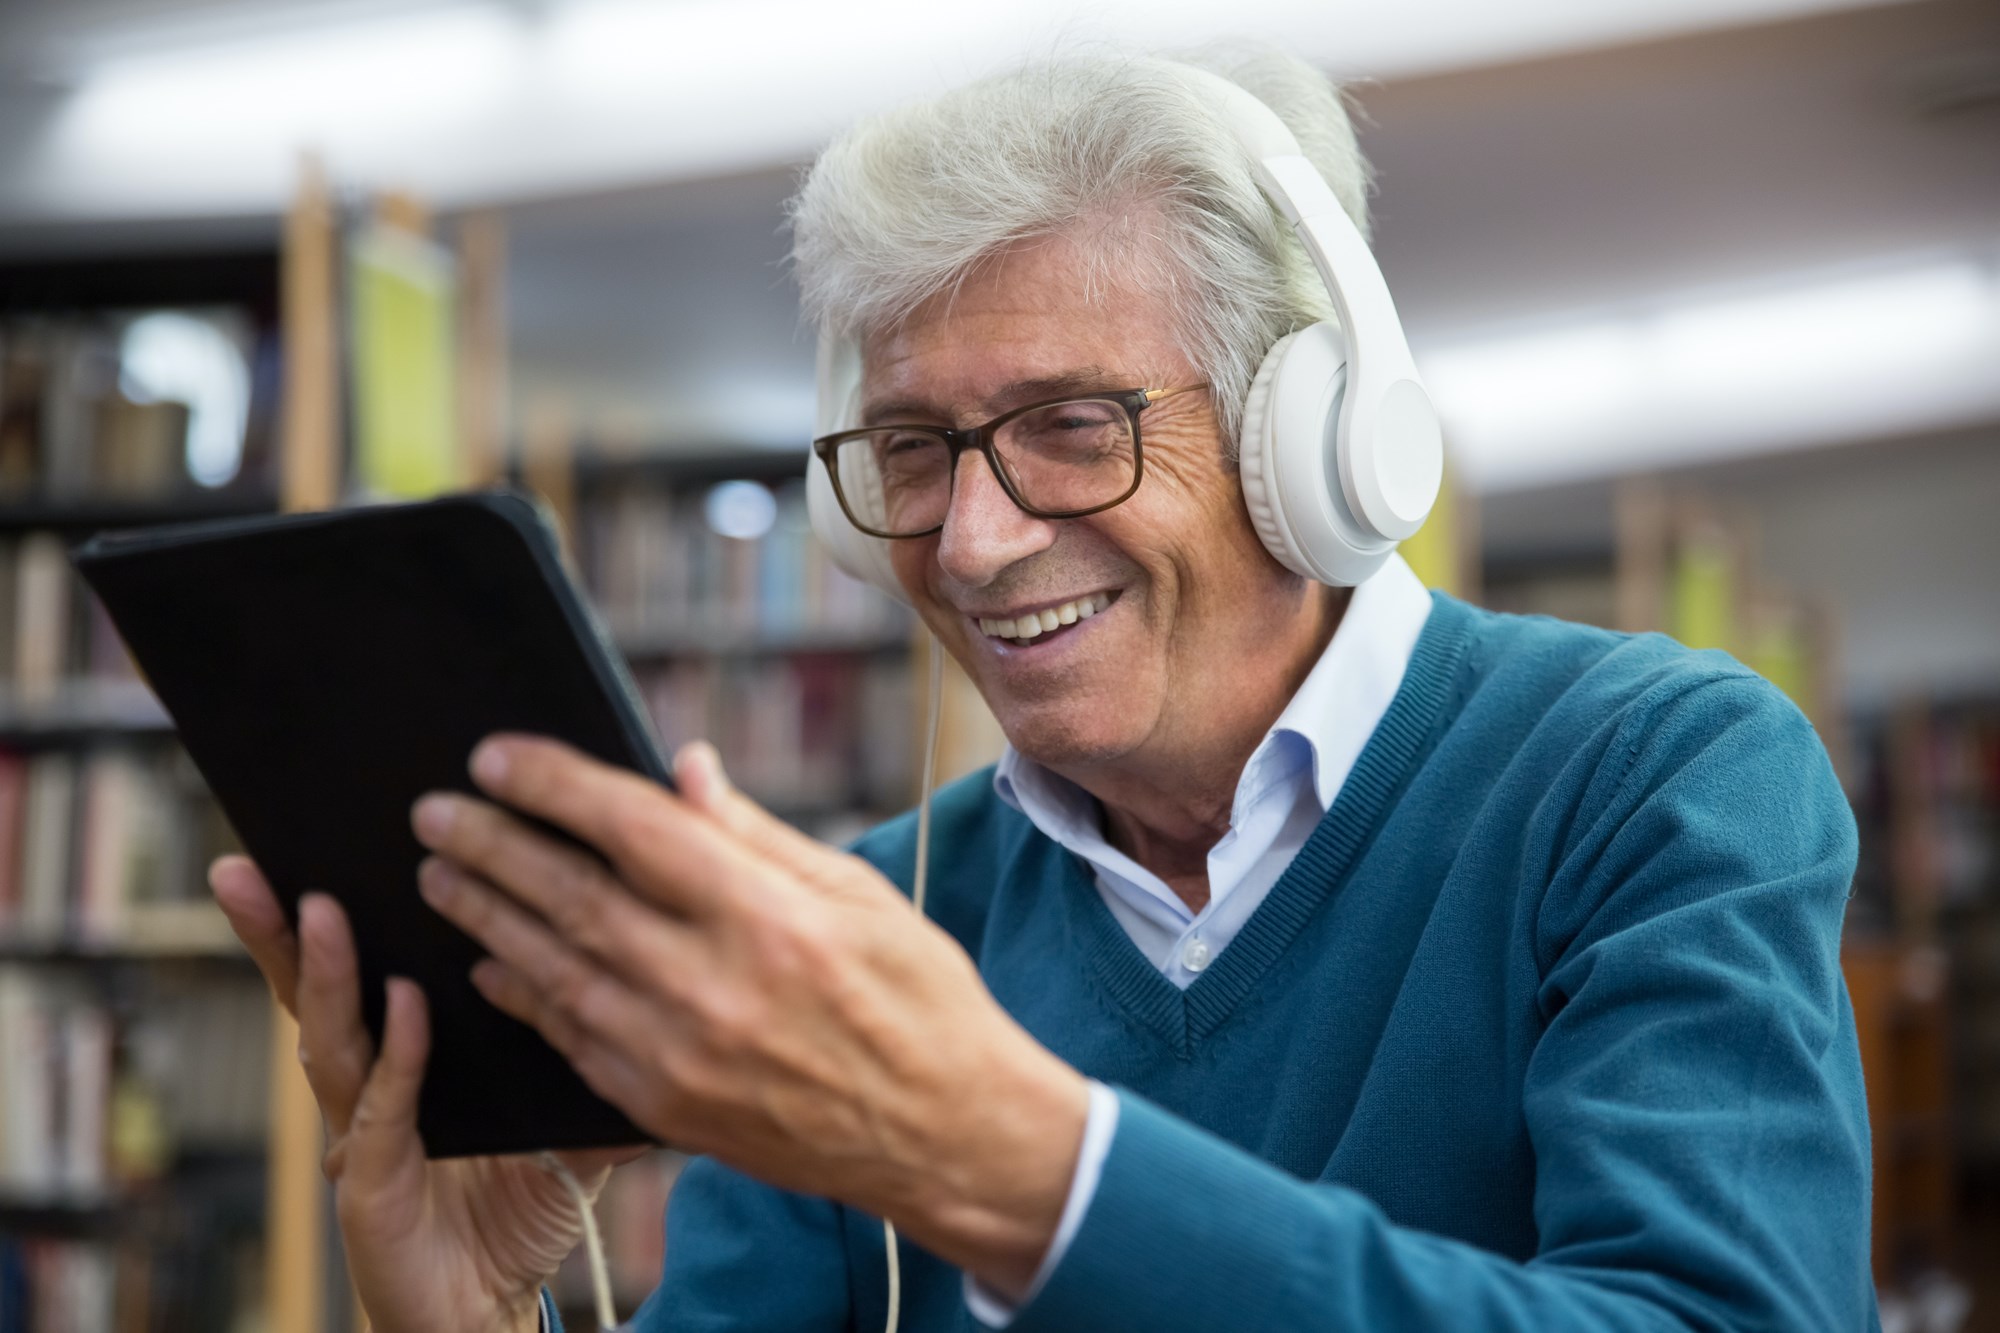 Senior Man listening to an audio book